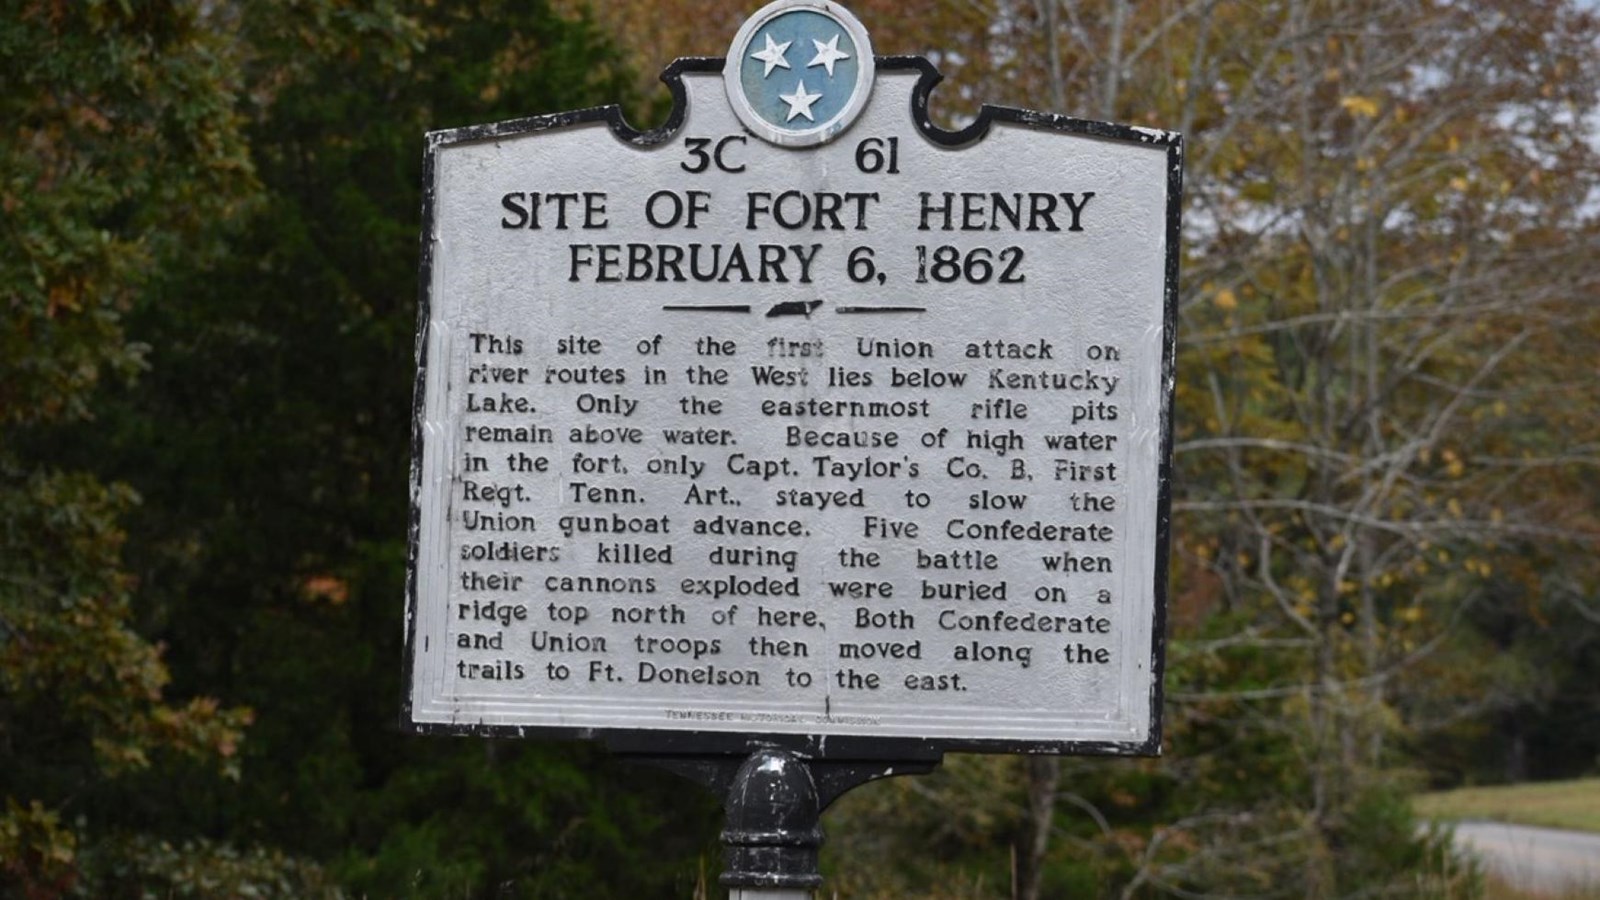 historicla marker